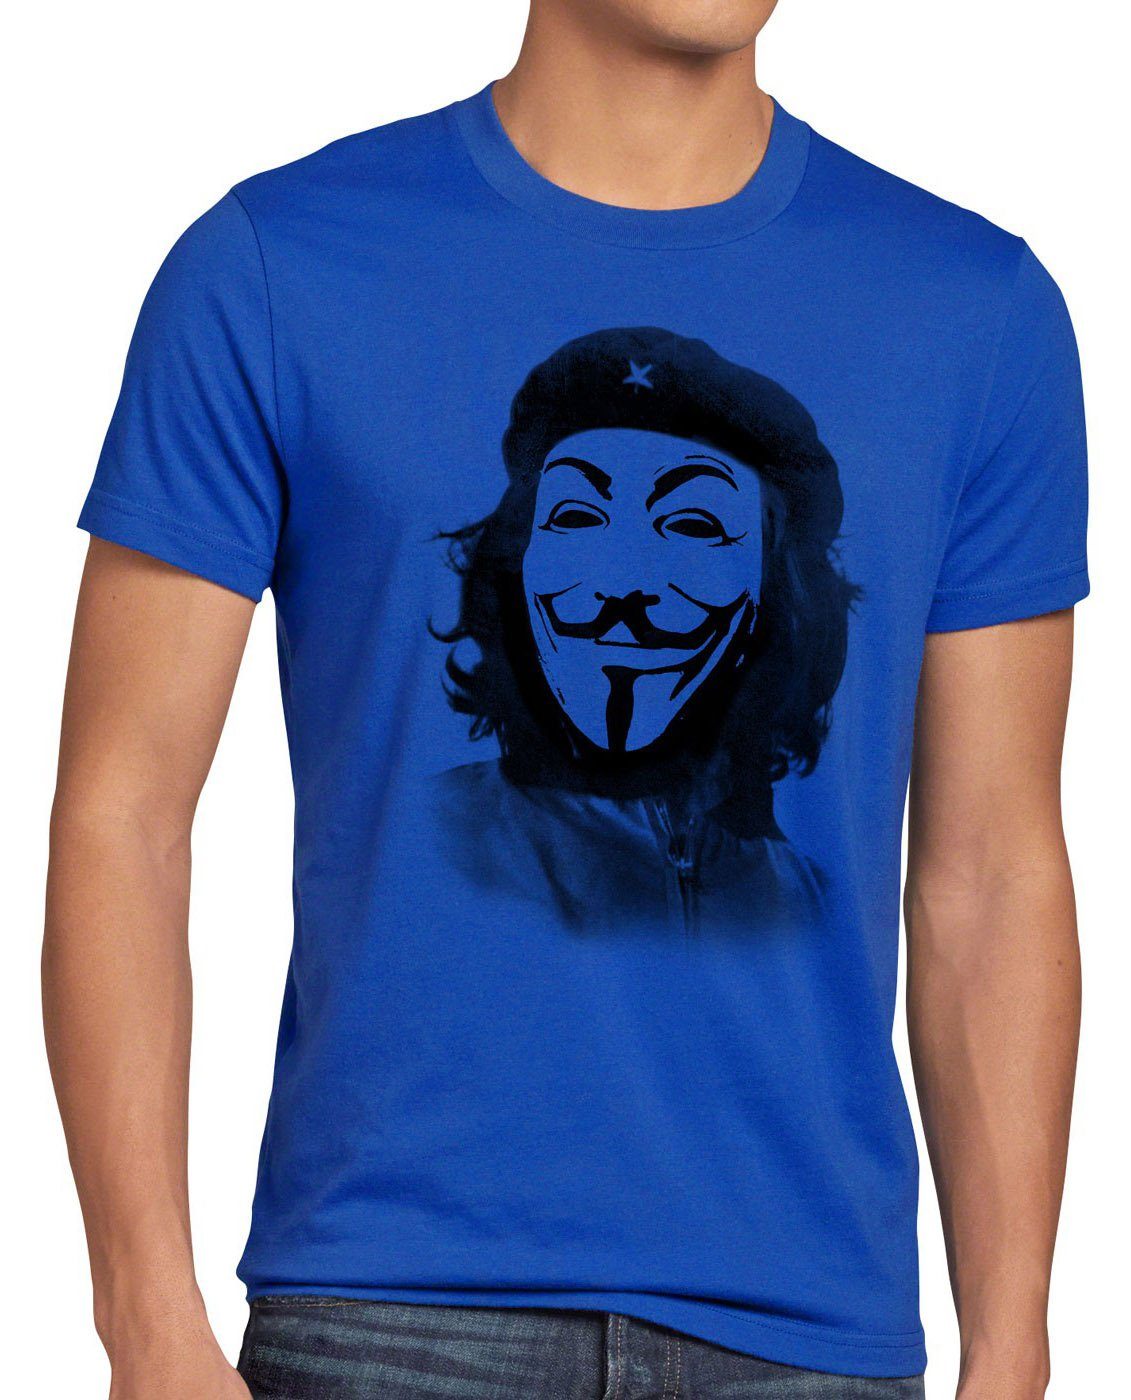 style3 Print-Shirt Herren T-Shirt Anonymous Che Guevara guy fawkes occupy maske guy fawkes hacker g8 kuba blau